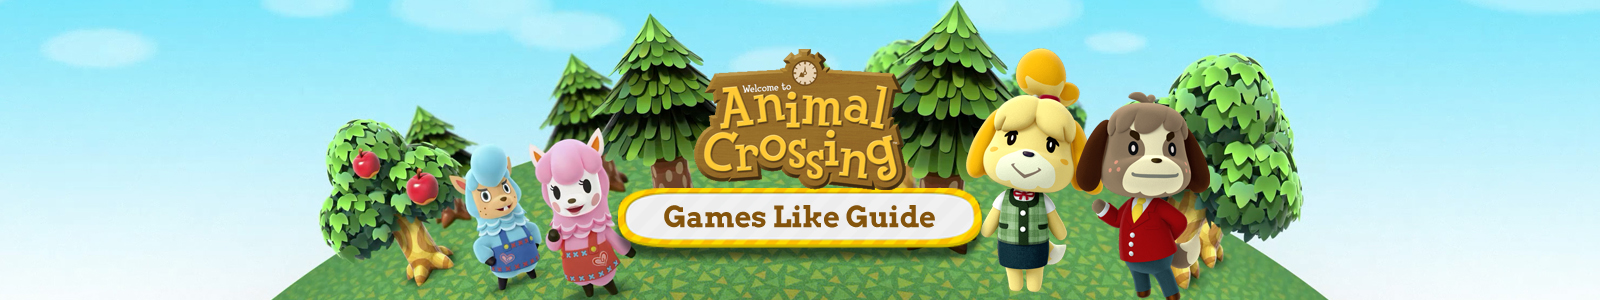 Animal Crossing New Horizons Spiele wie Anleitung